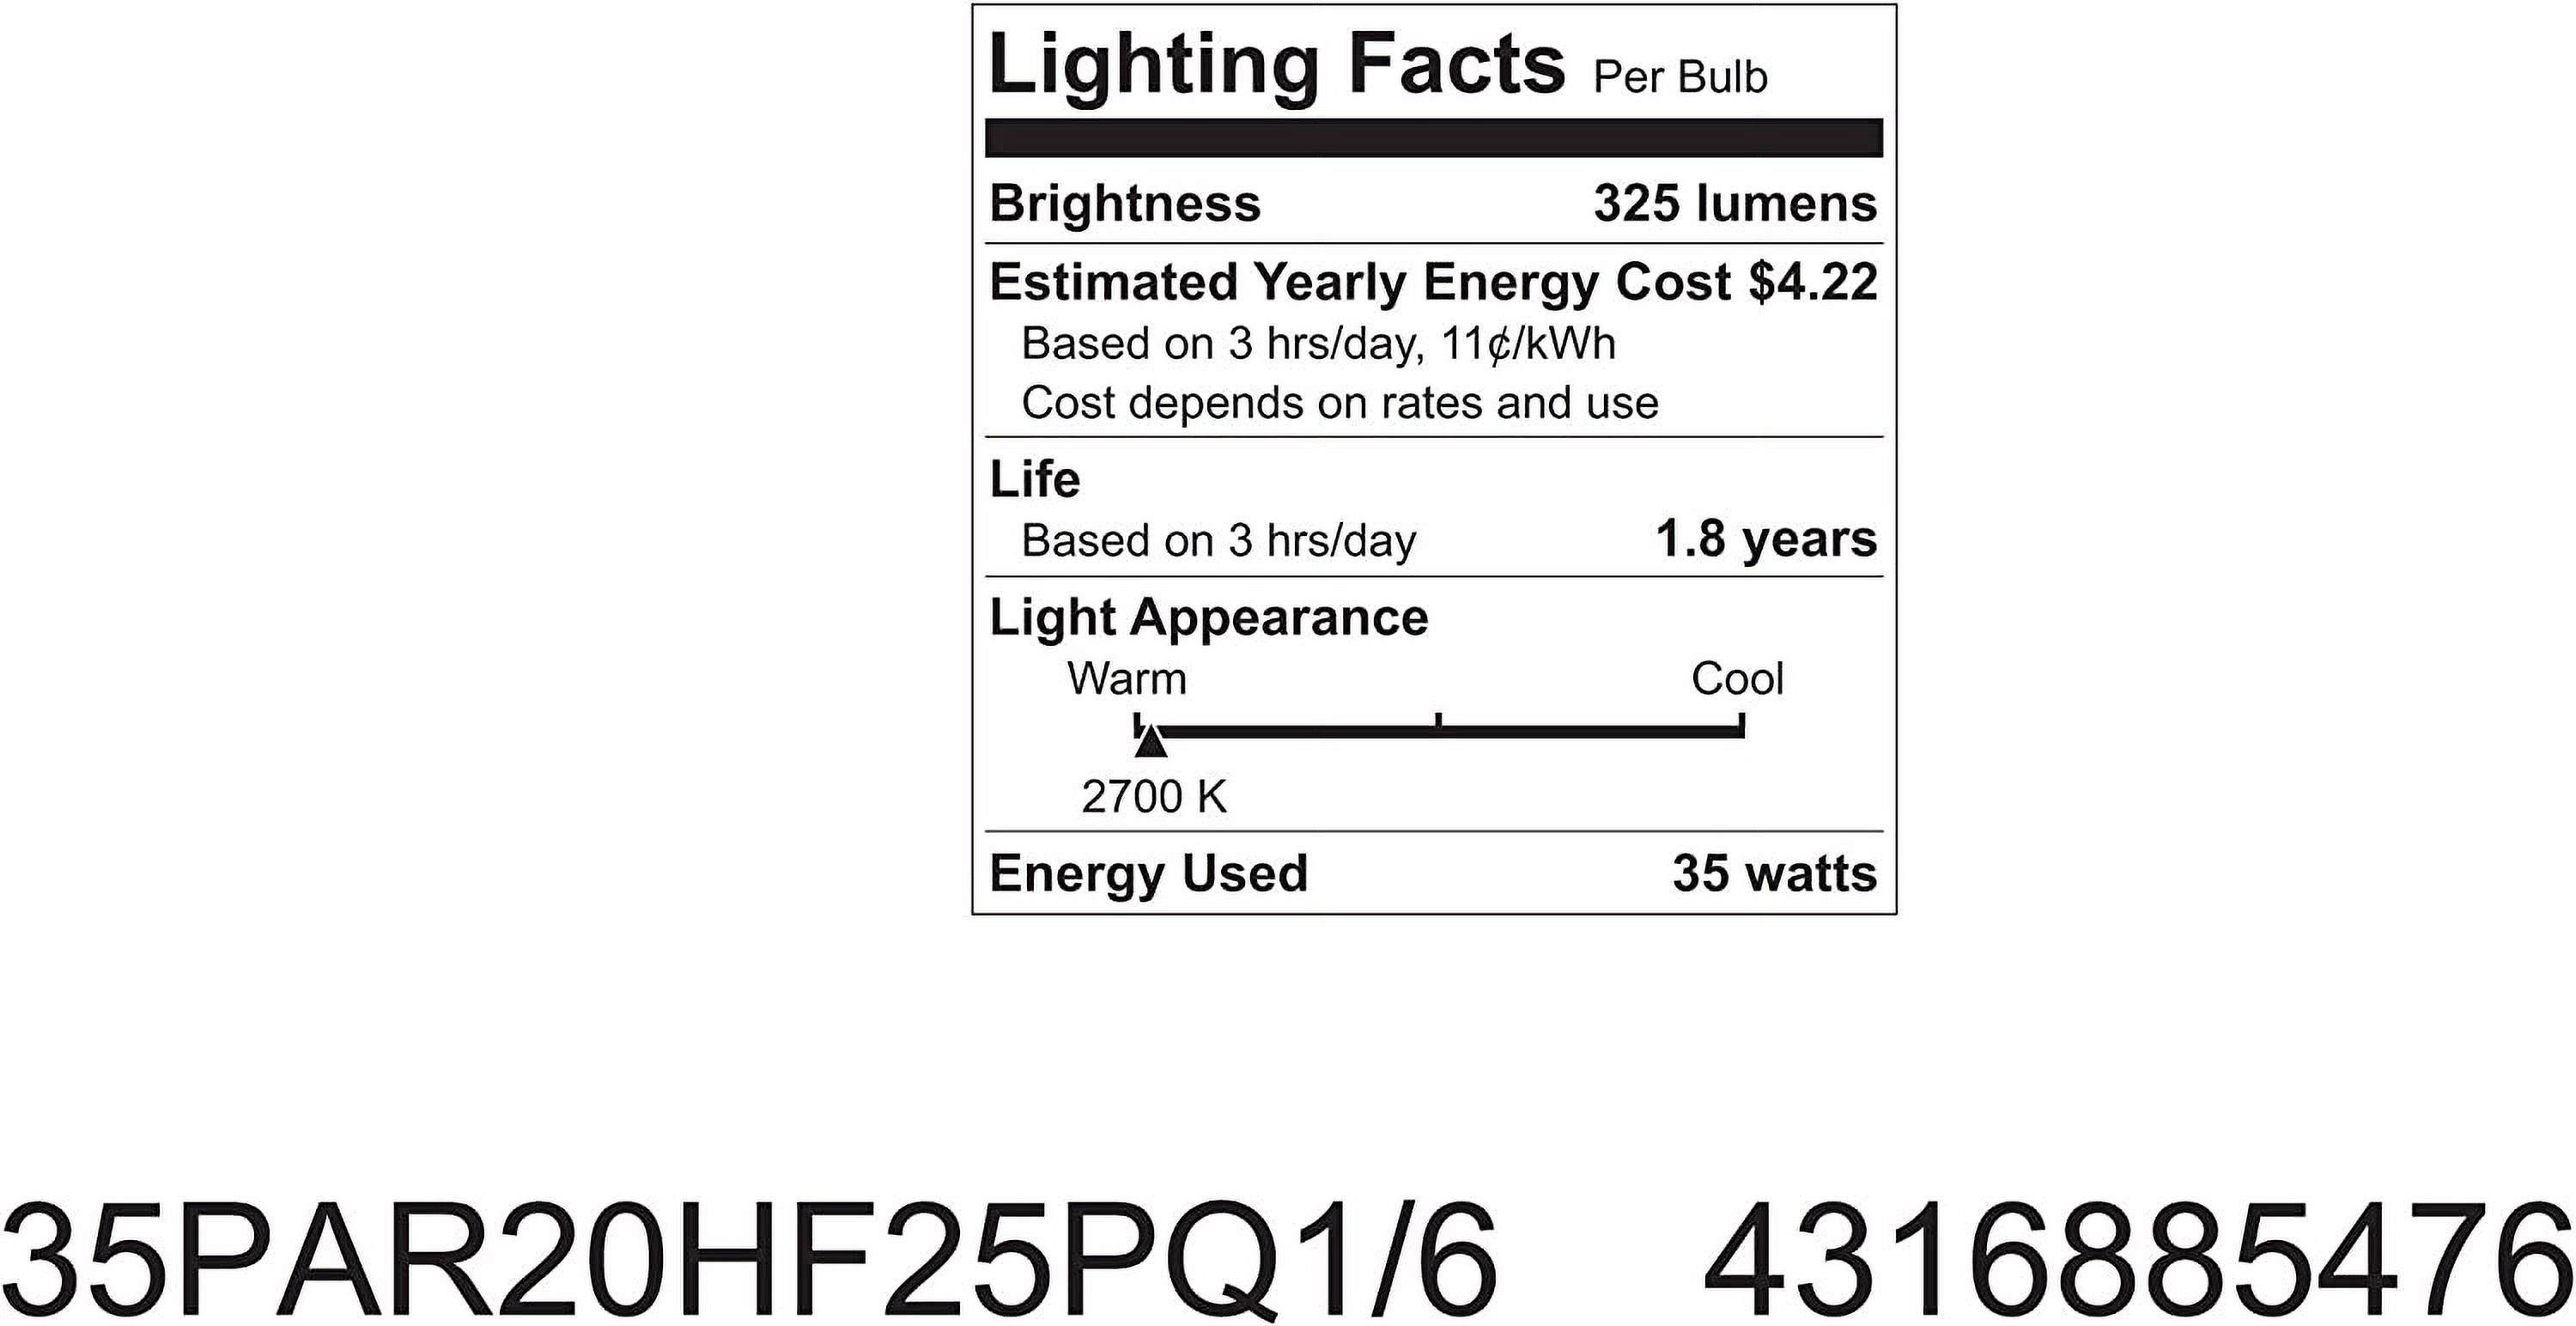 GE 85476 - 35PAR20H/F25-PQ1/6 PAR20 Halogen Light Bulb - image 3 of 3